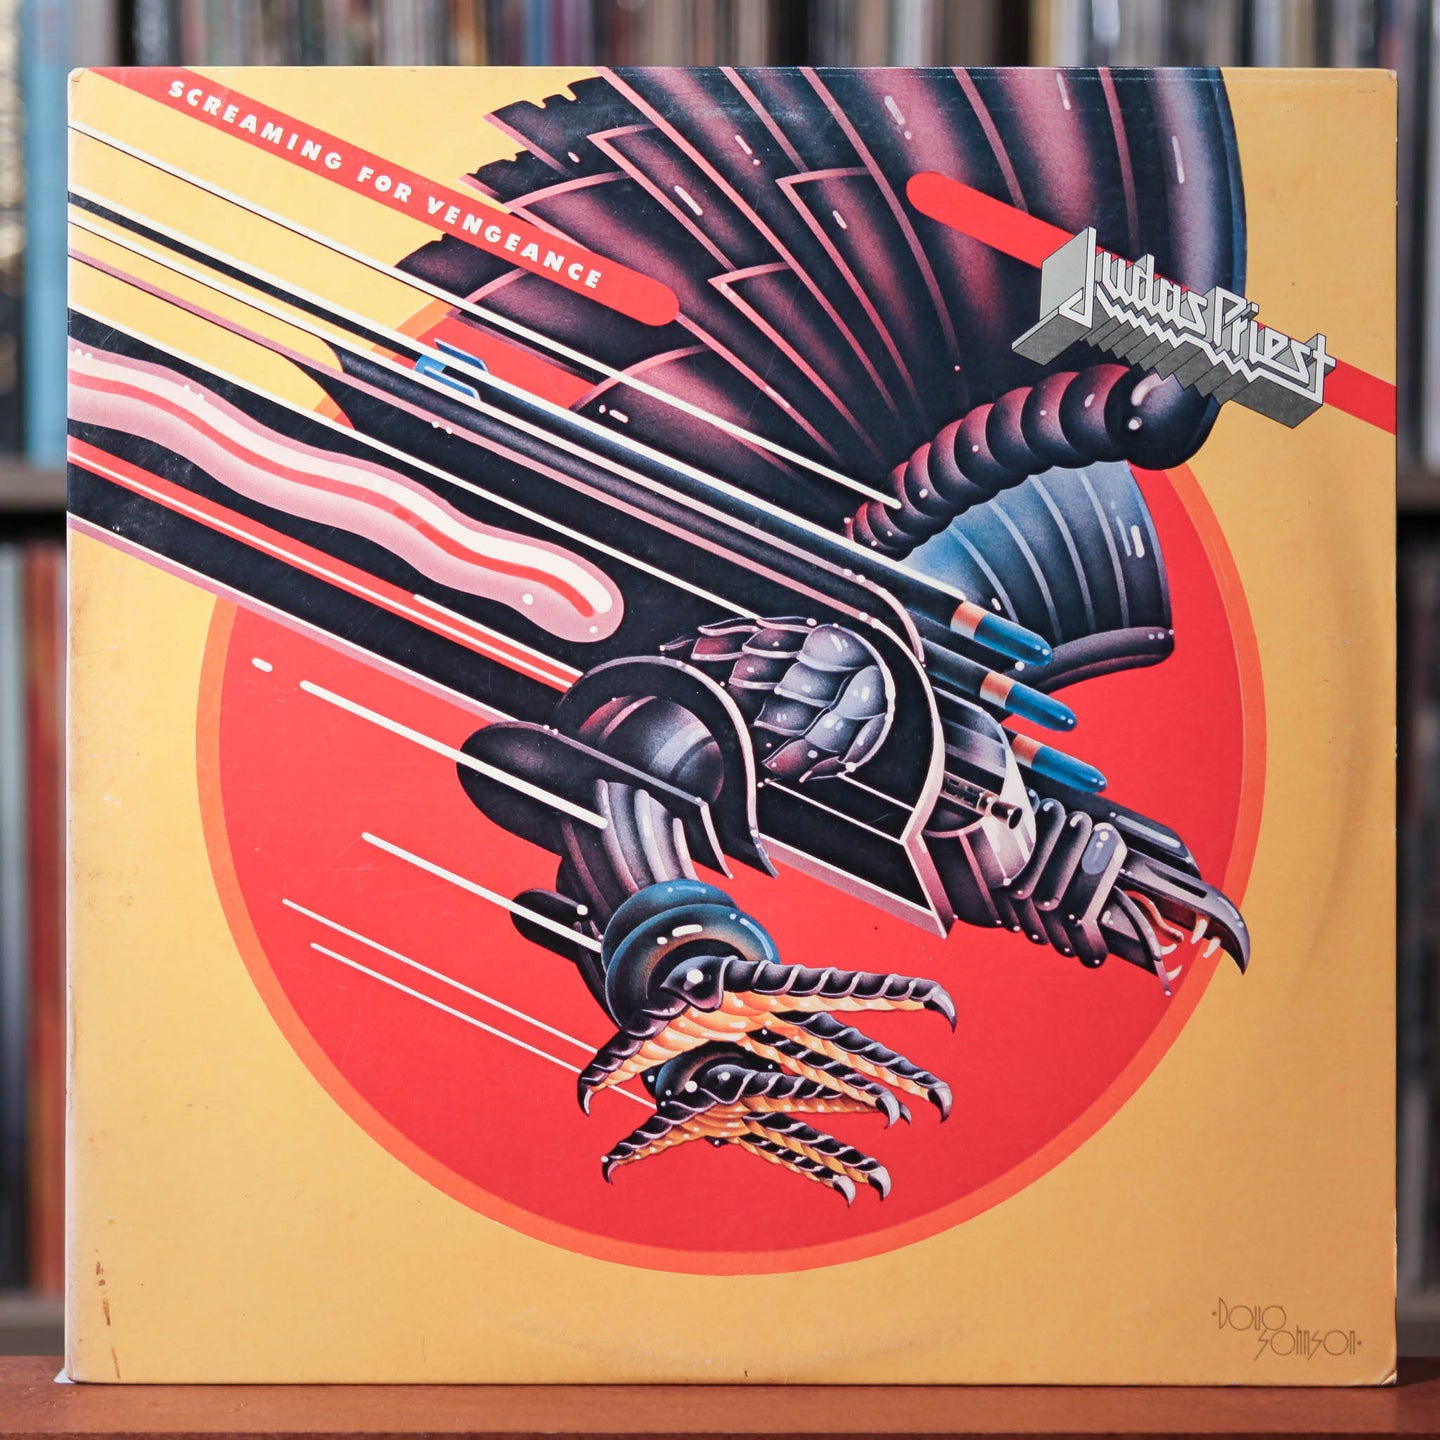 Judas Priest - Screaming For Vengeance - 1982 CBS, VG+/VG+